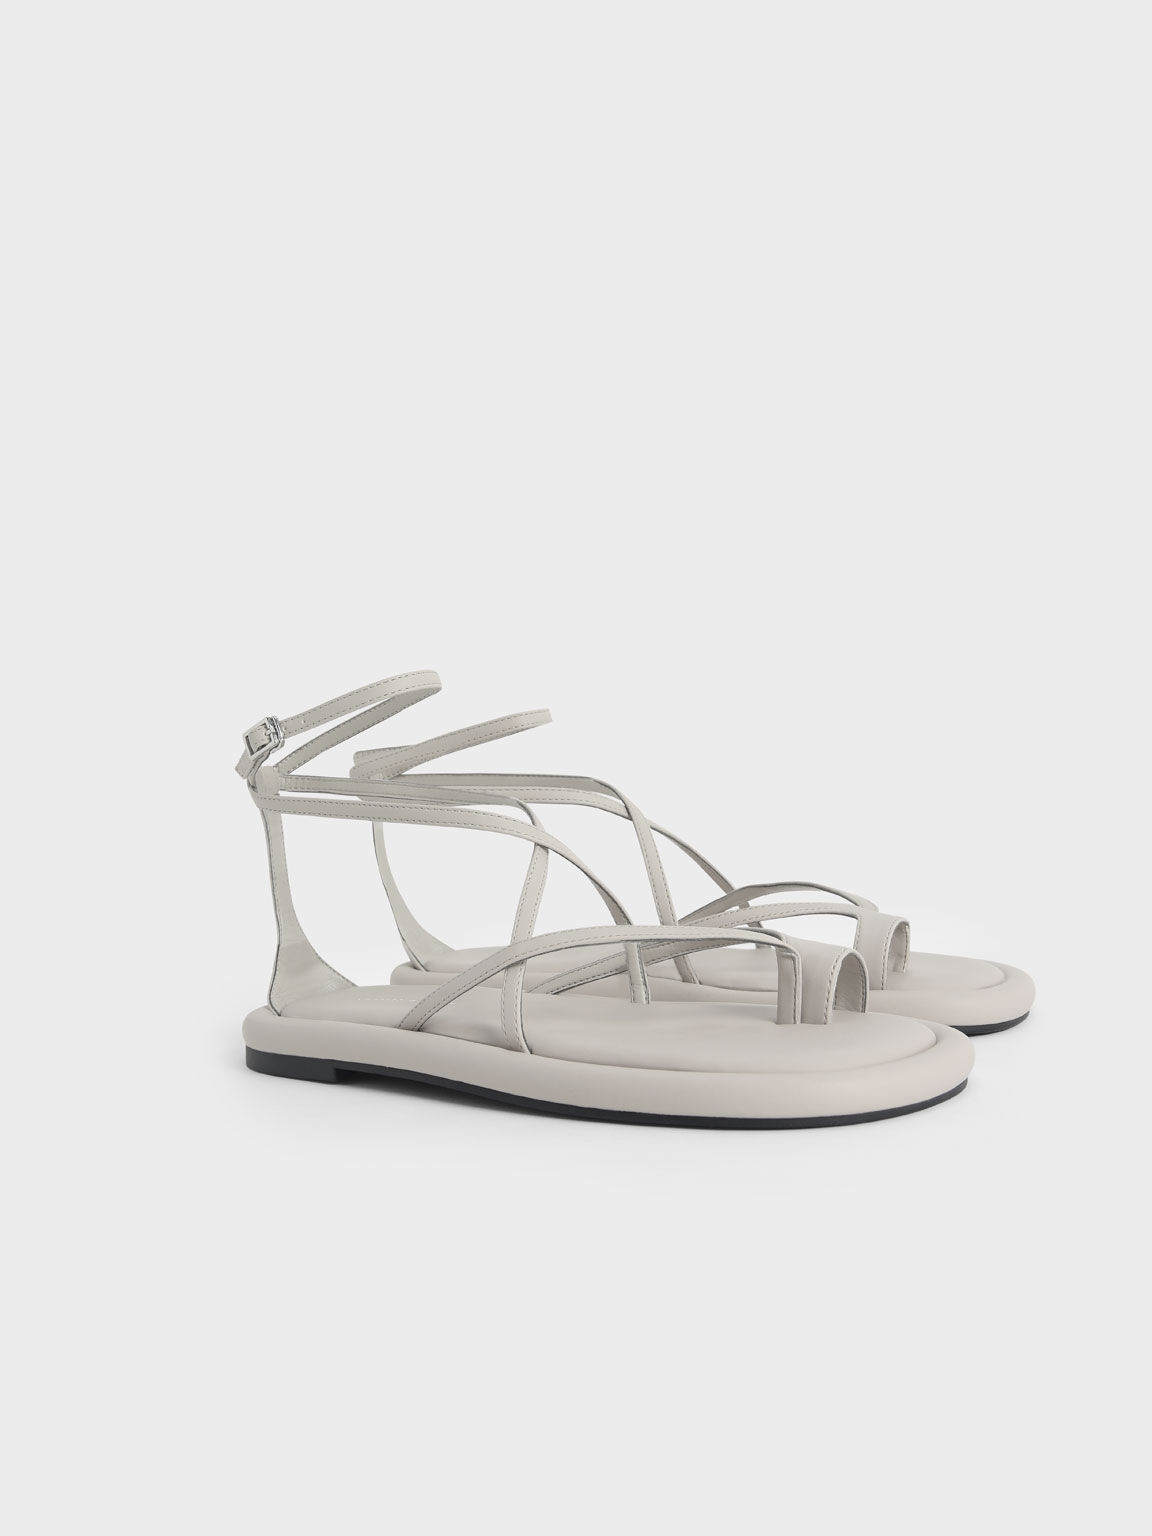 Padded Toe Loop Sandals, Grey, hi-res